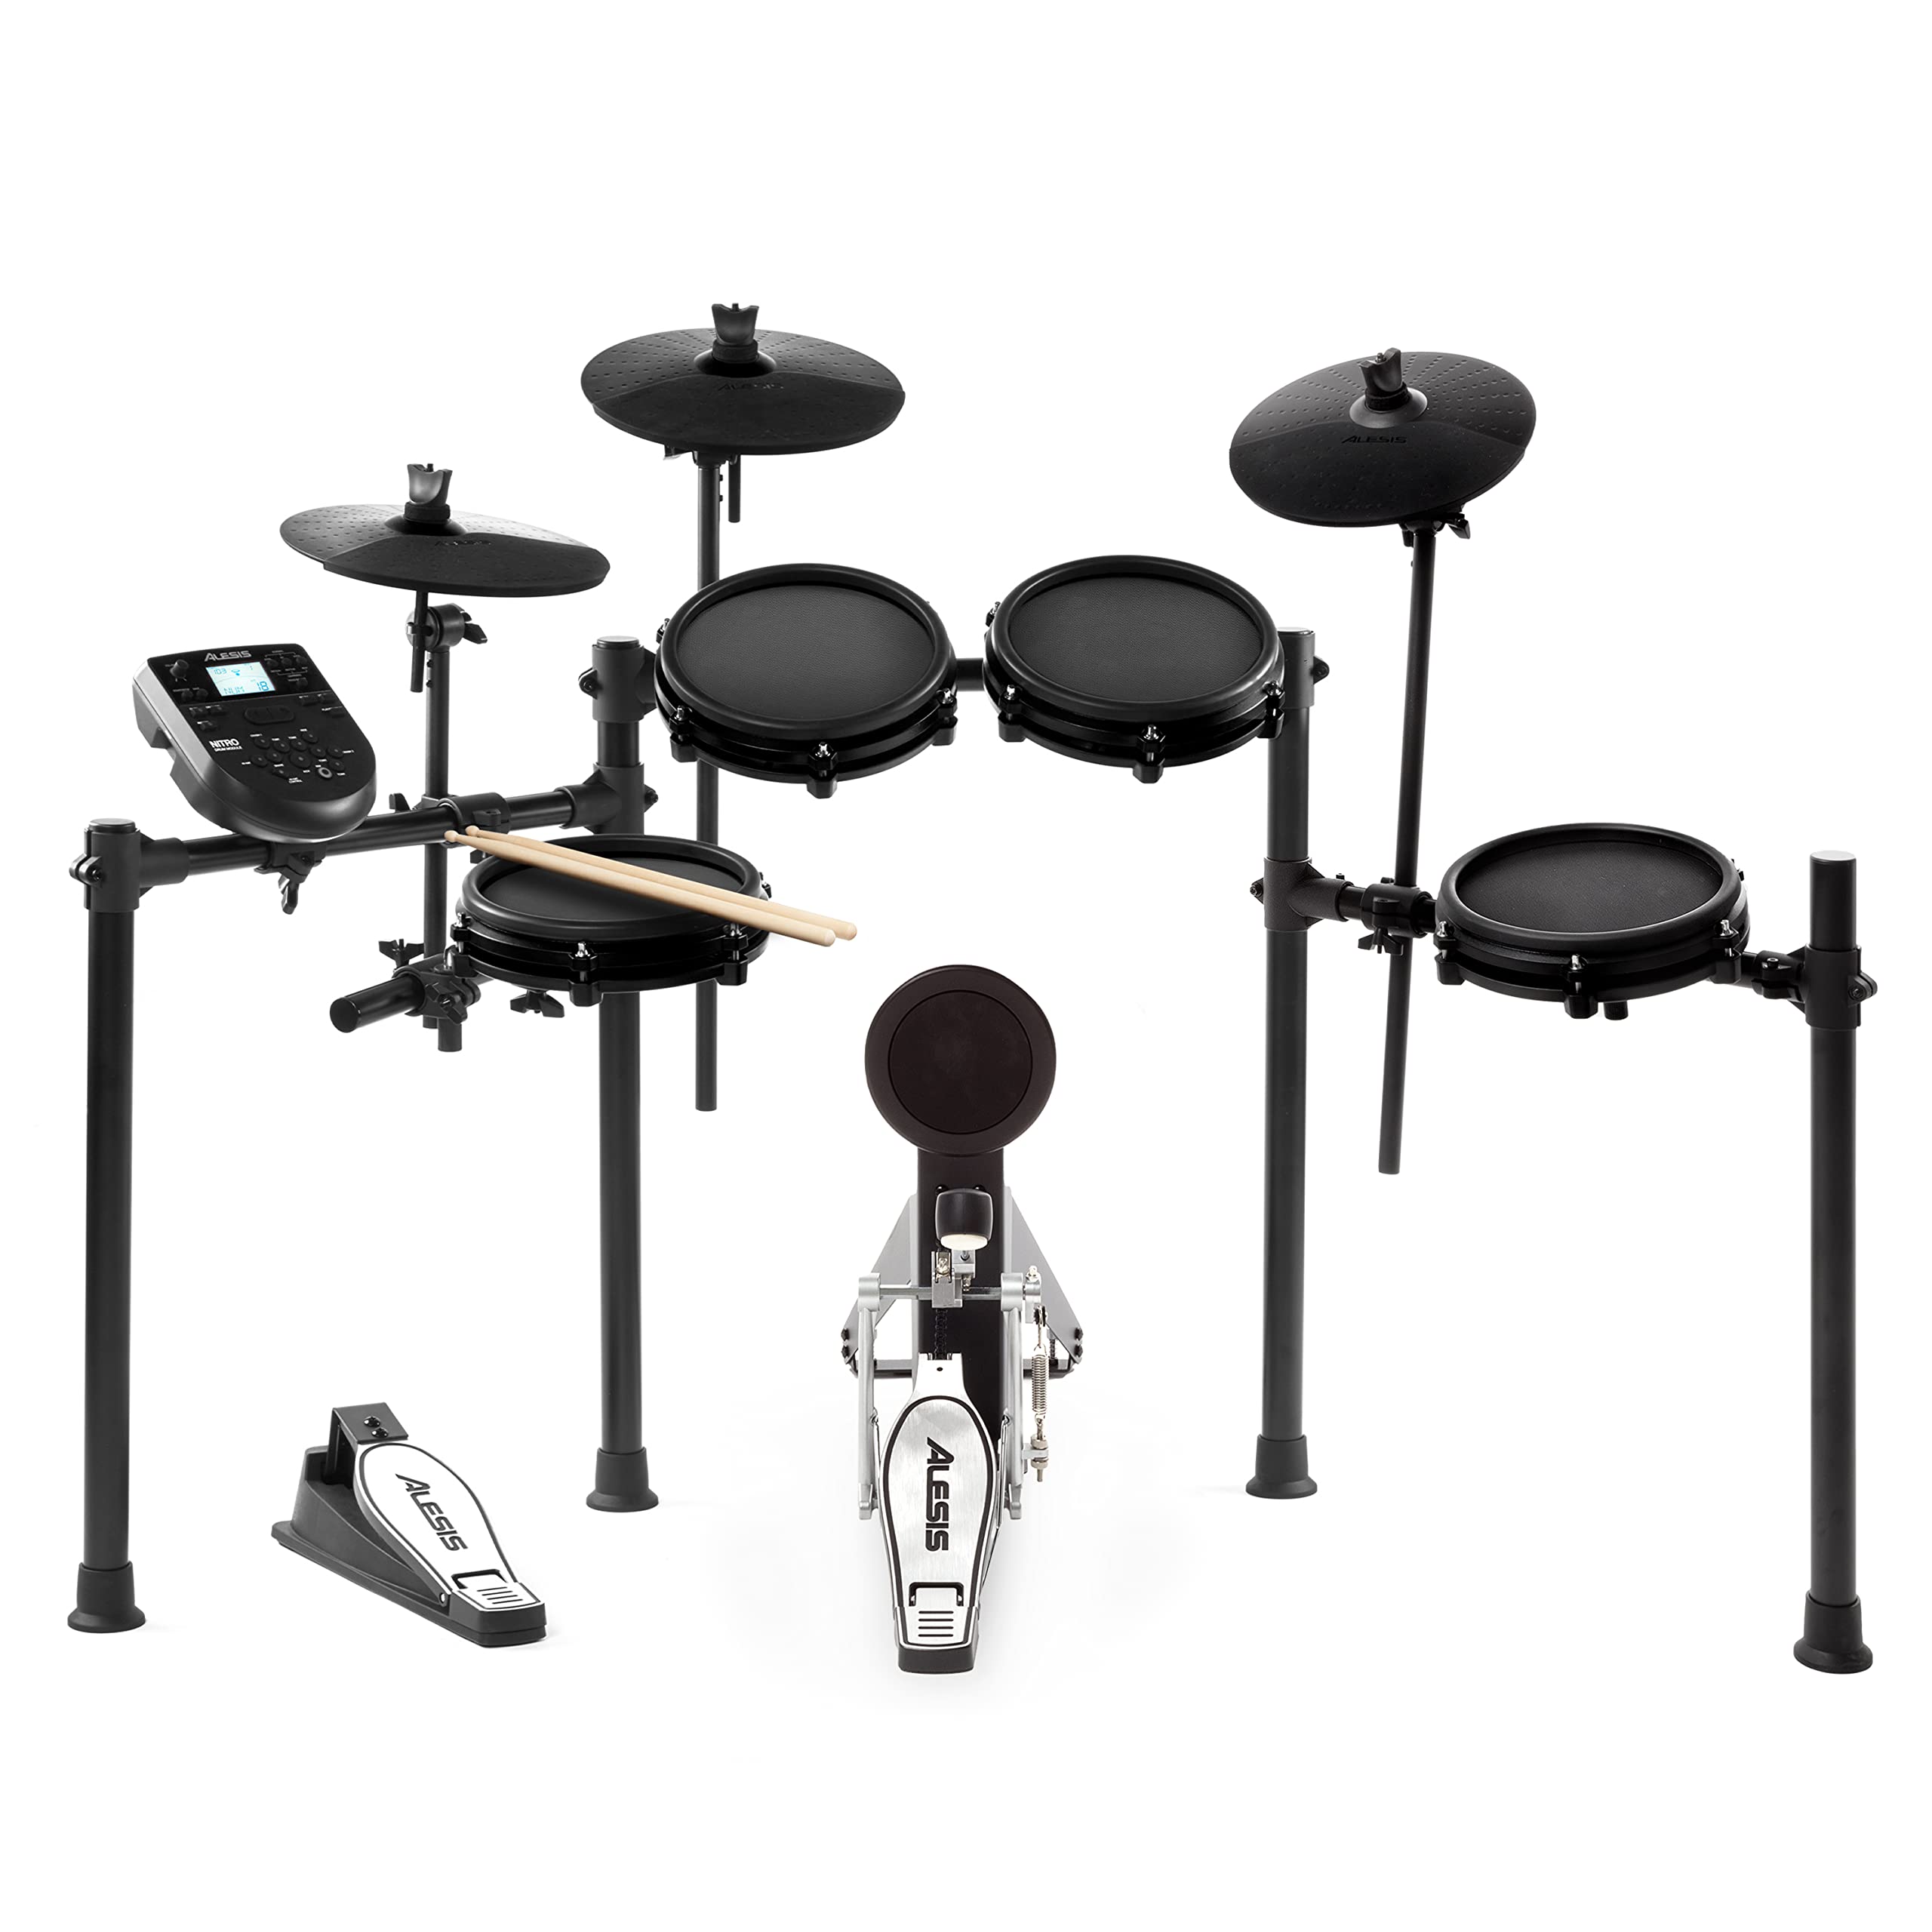 Alesis Nitro Mesh Kit - Electronic Drum Set with Quiet Mesh Pads, USB MIDI, Kick Pedal and Rubber Kick Drum, 40 Kits, 385 Sounds, Drum Lessons $299